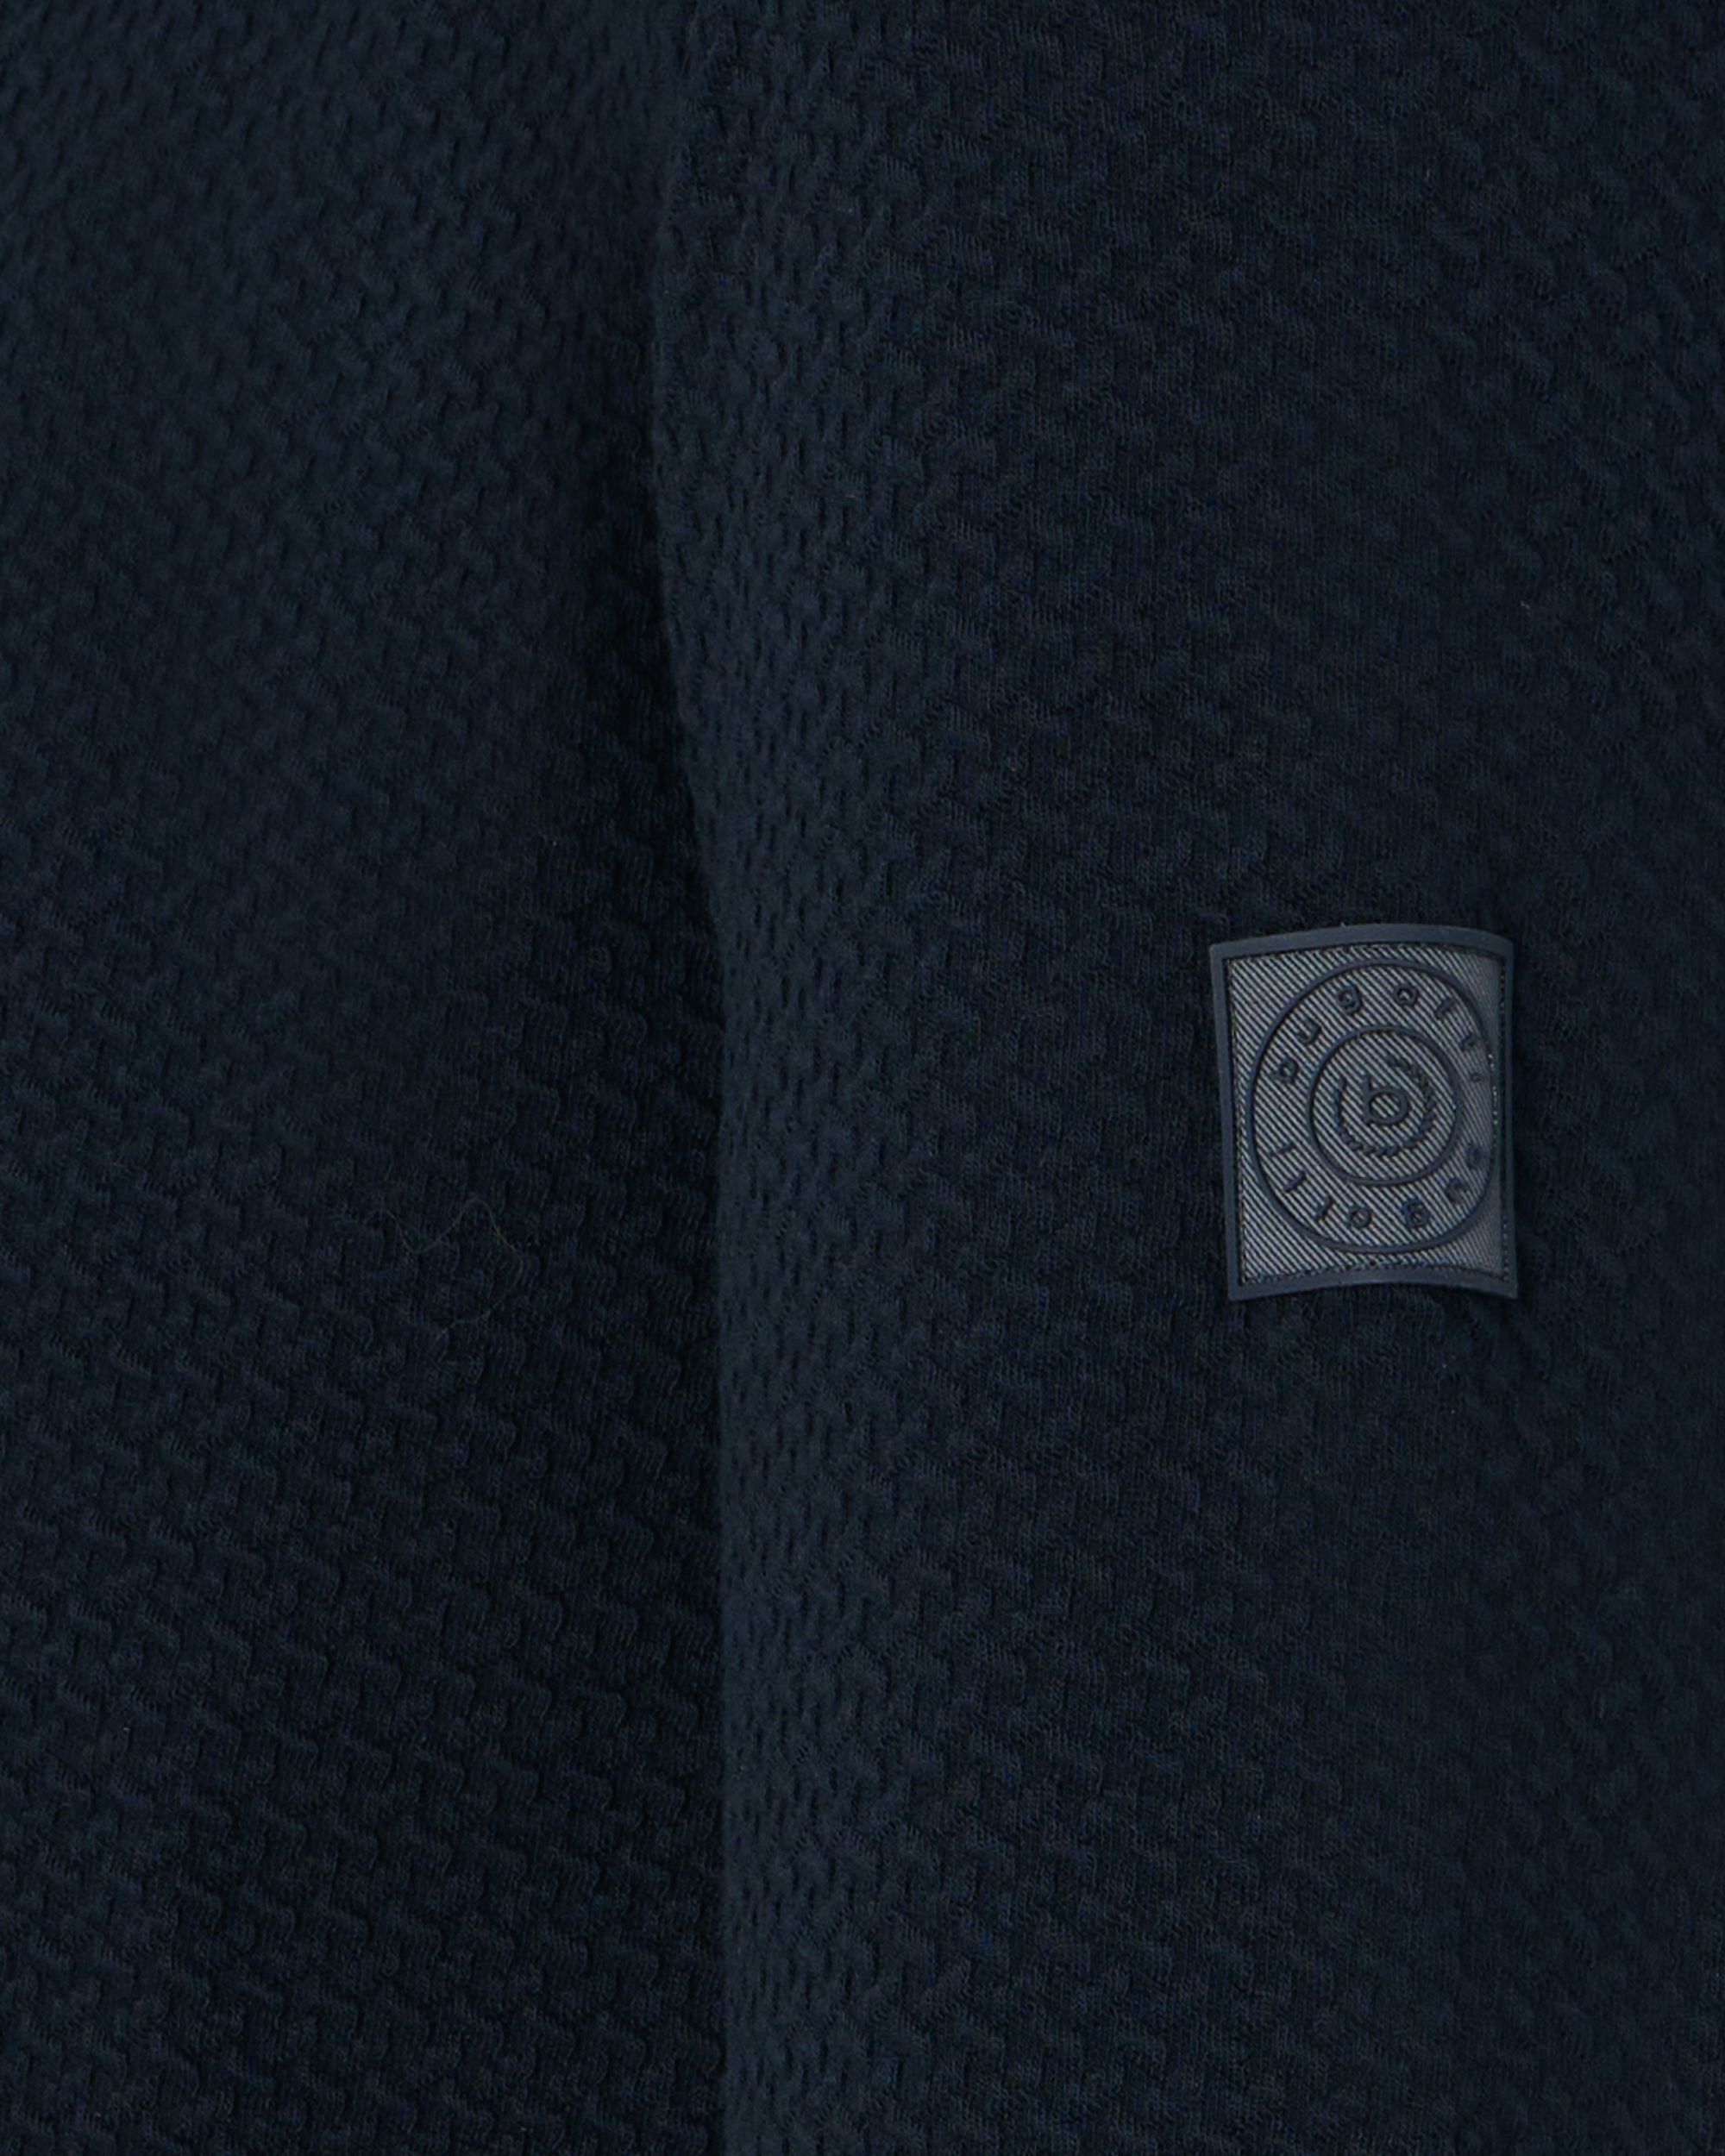 Bugatti clothing Vest Donker blauw 093810-001-L